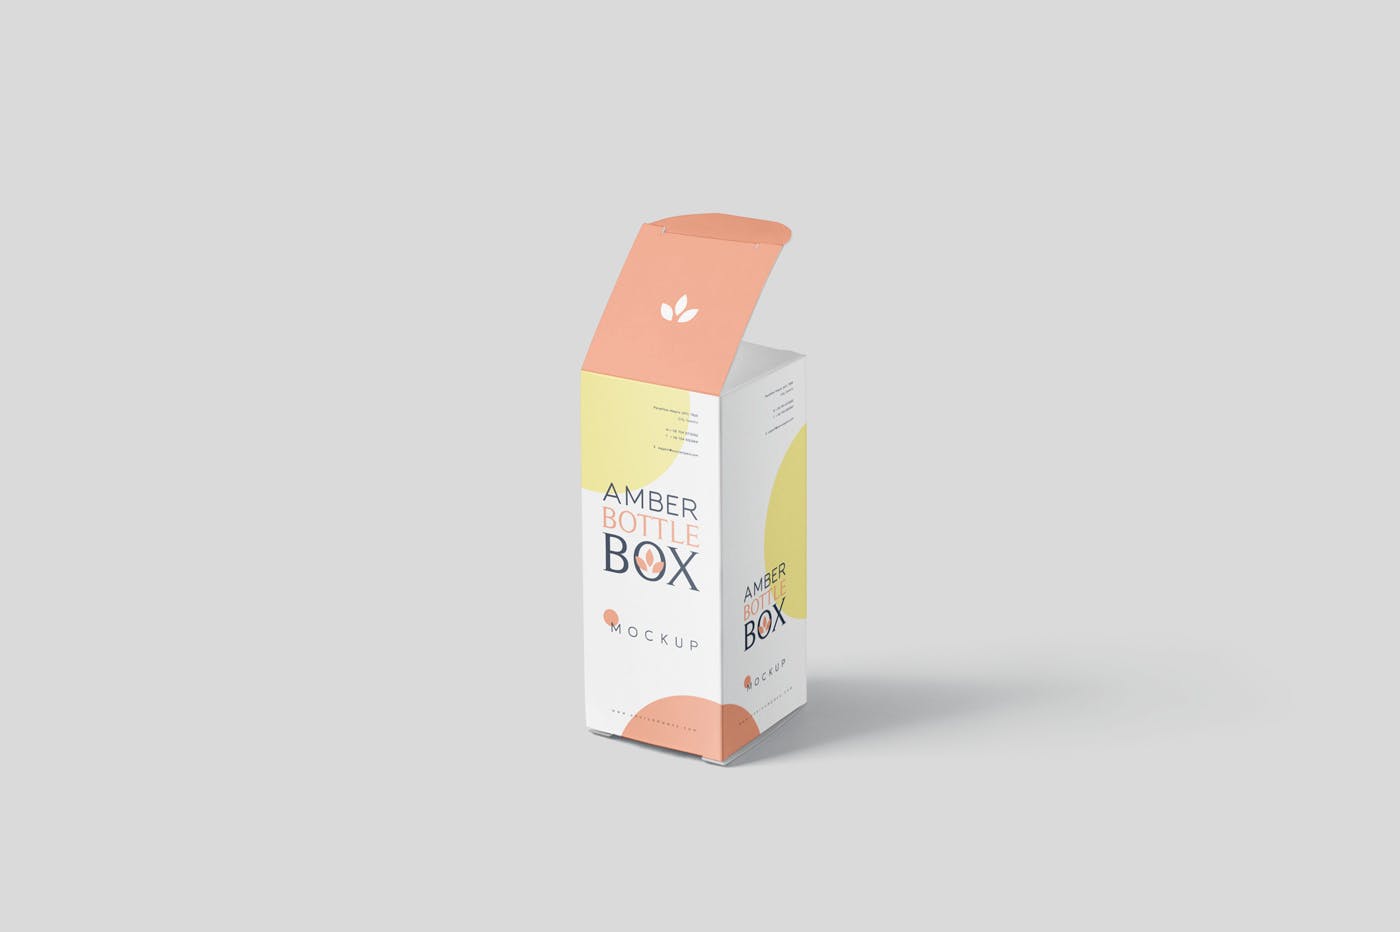 药物瓶&包装纸盒设计图素材库精选模板 Amber Bottle Box Mockup Set插图(5)